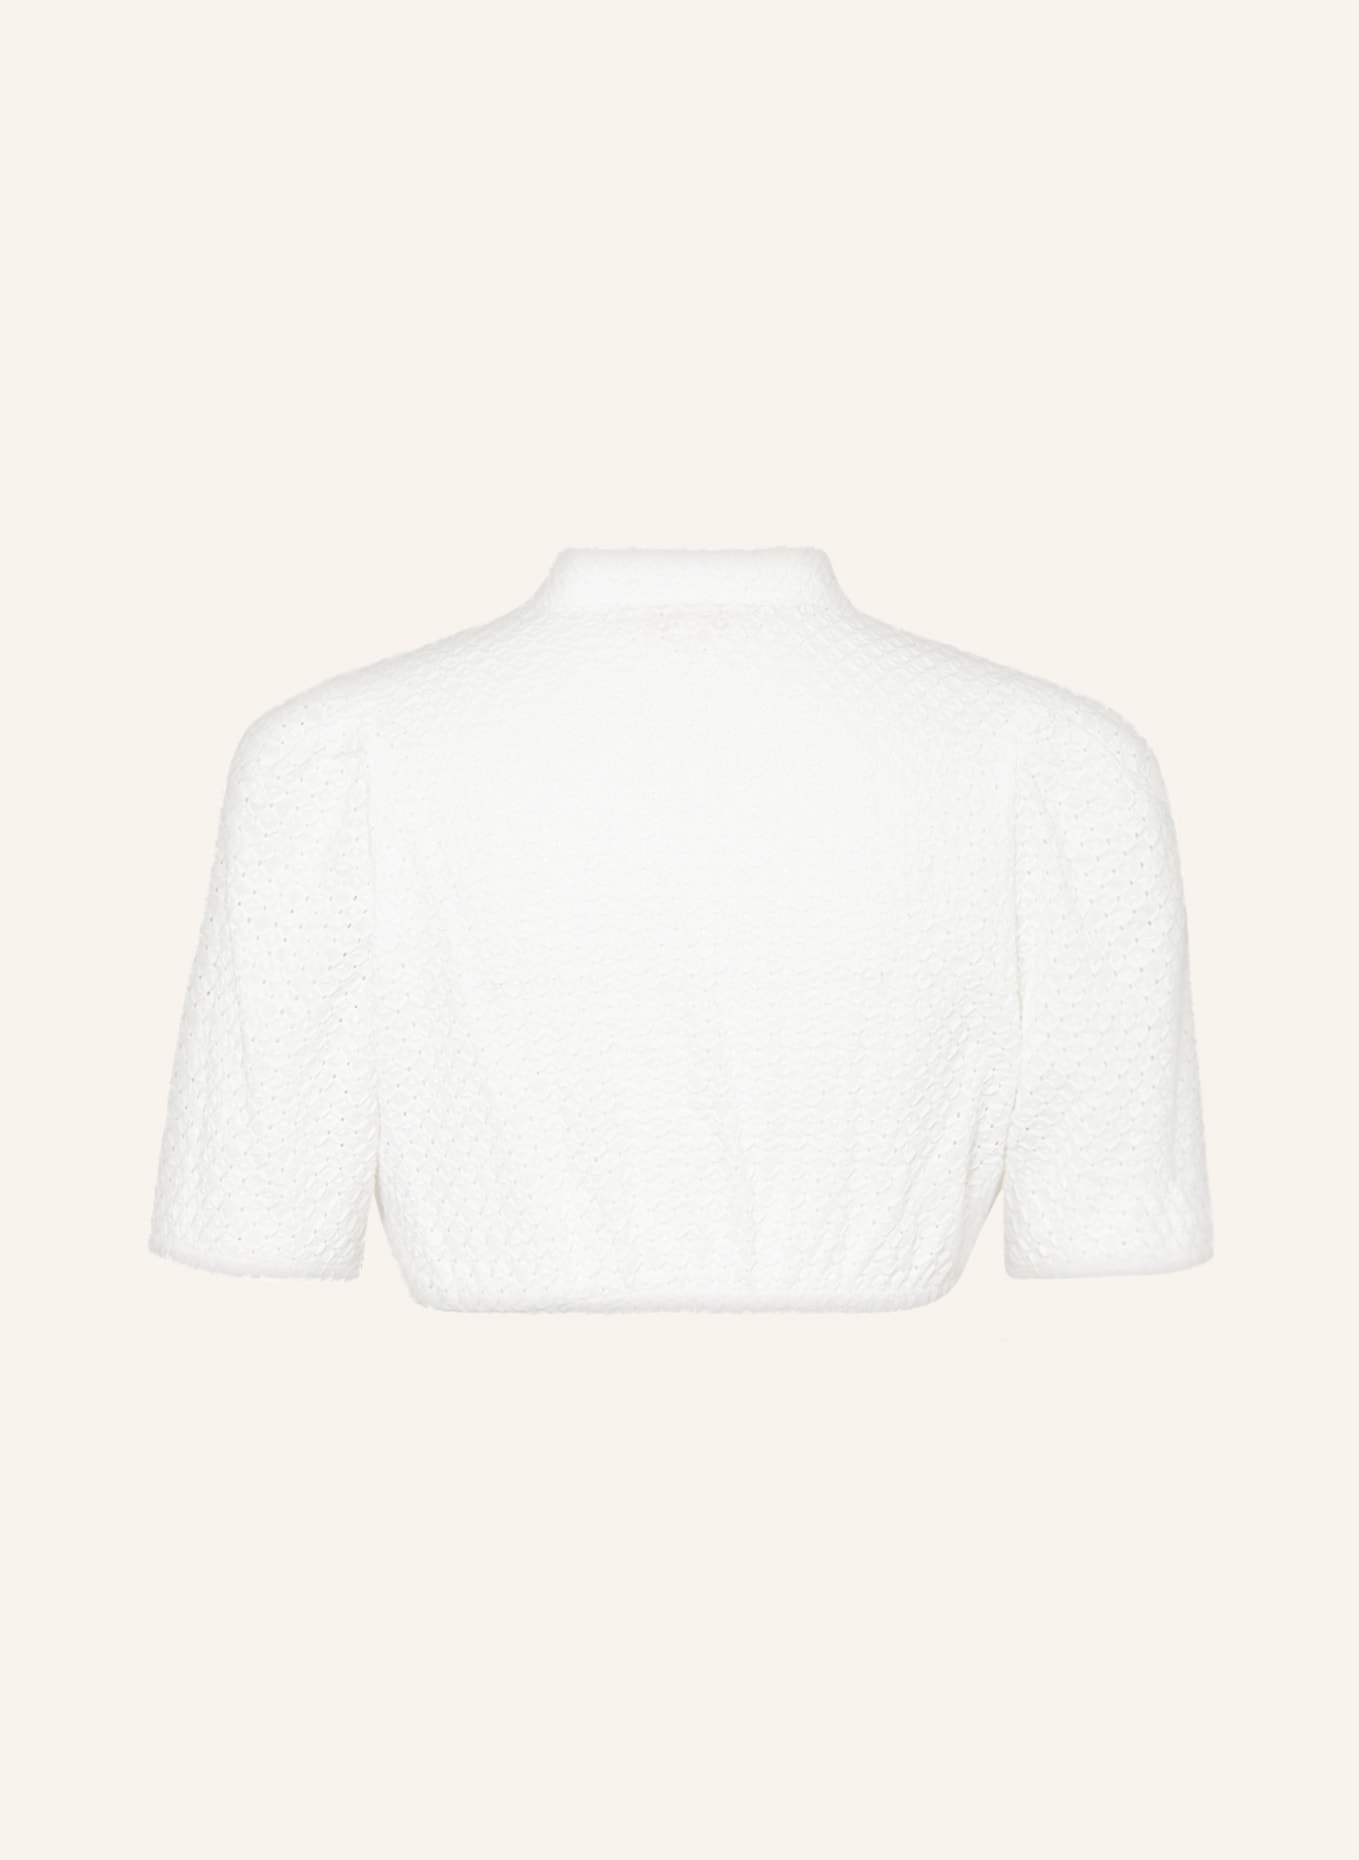 KRÜGER Dirndl blouse made of lace, Color: WHITE (Image 2)